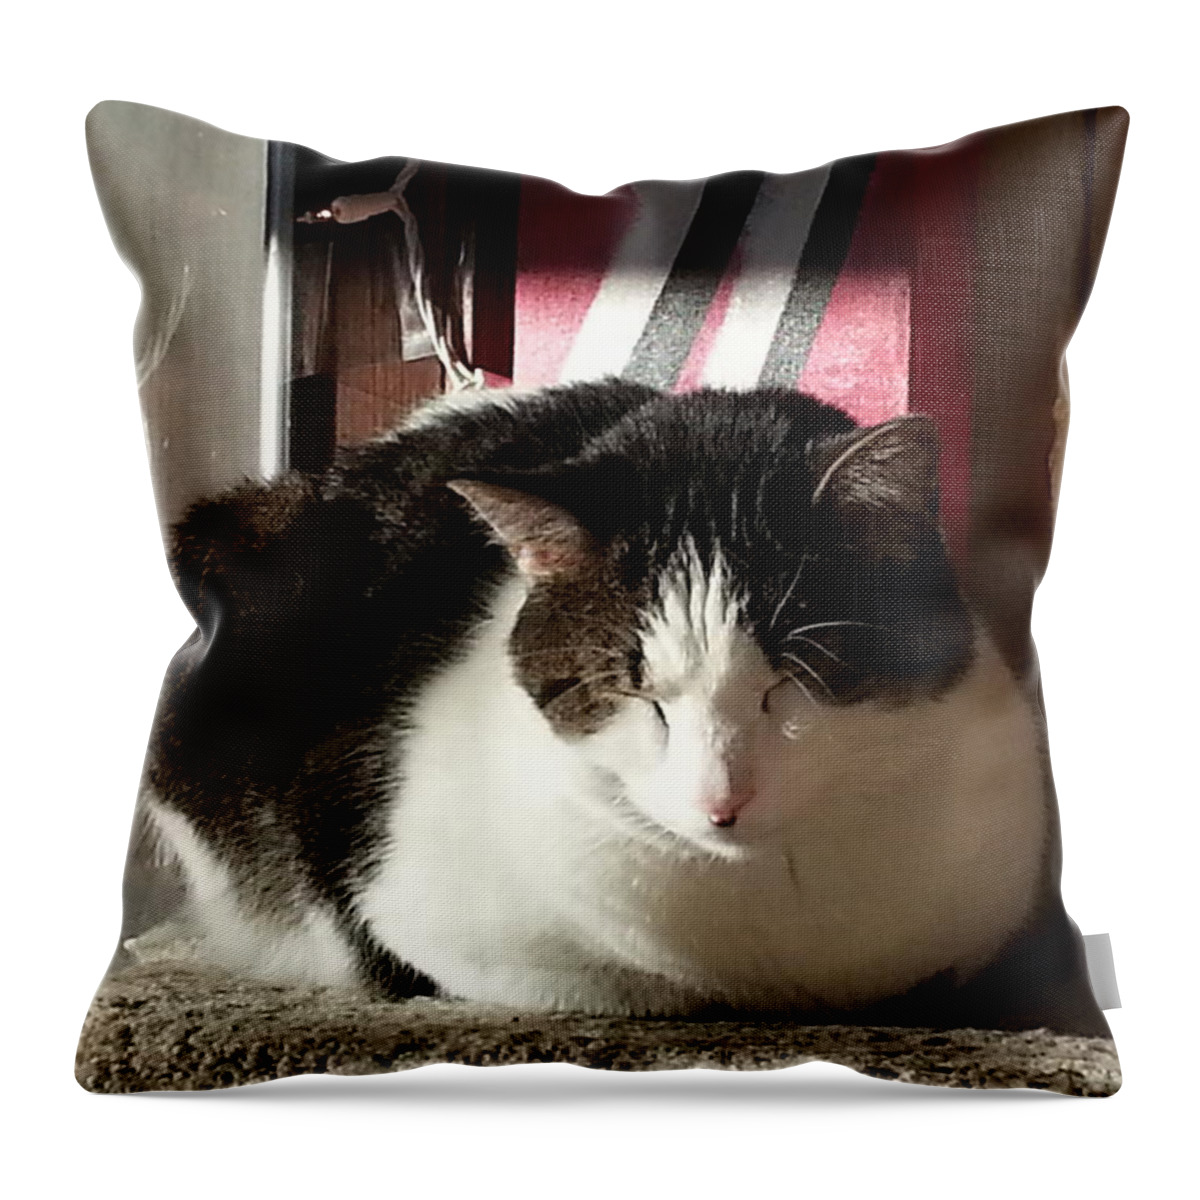 Cat Throw Pillow featuring the photograph Shhh by Caryl J Bohn